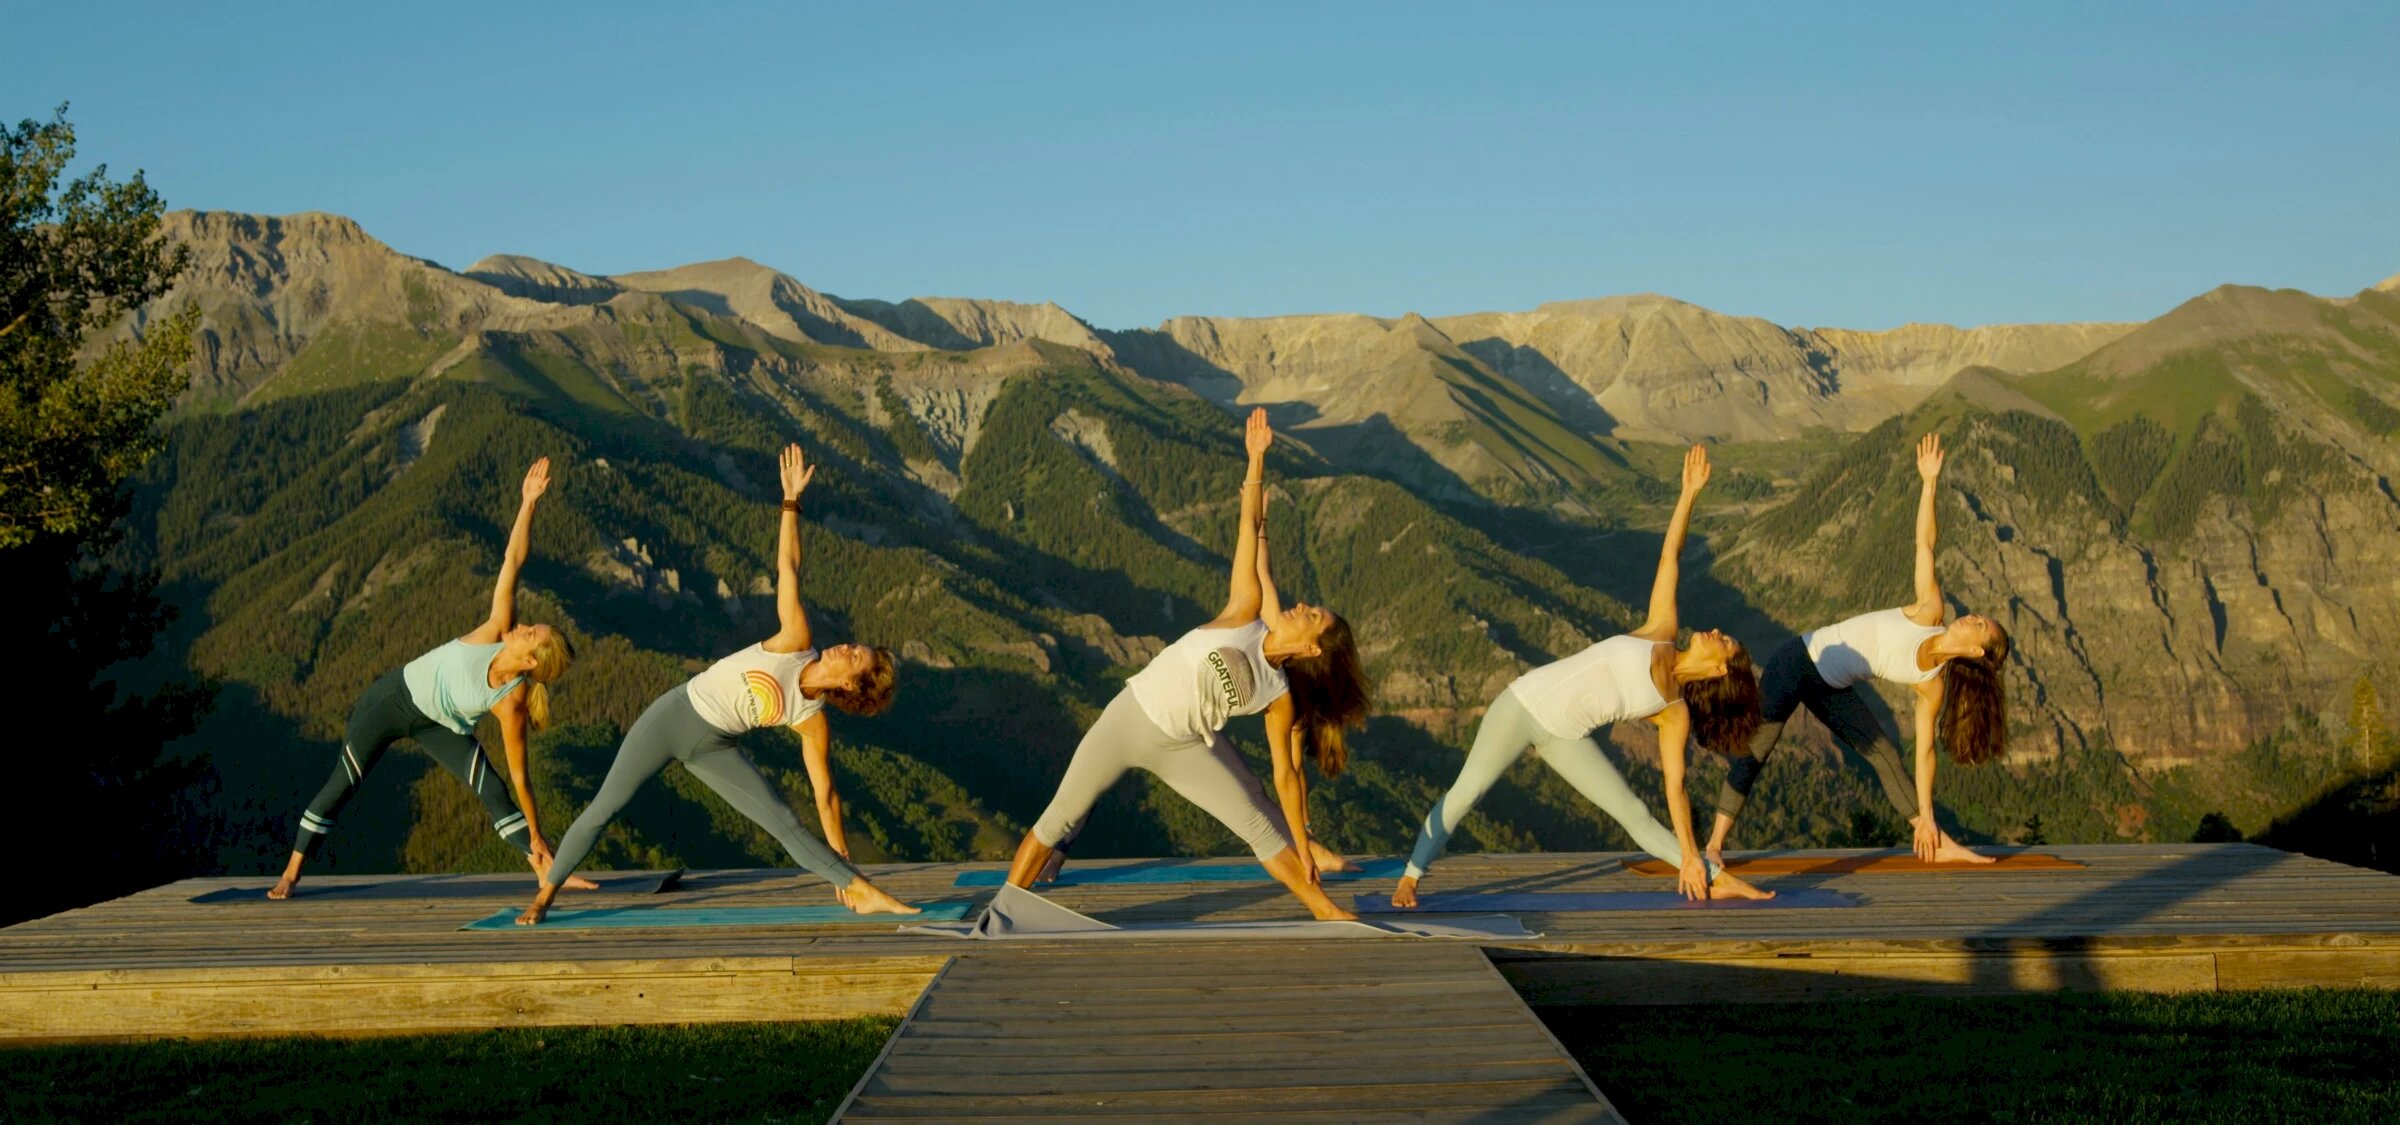 The Yoga Festival in Cyprus